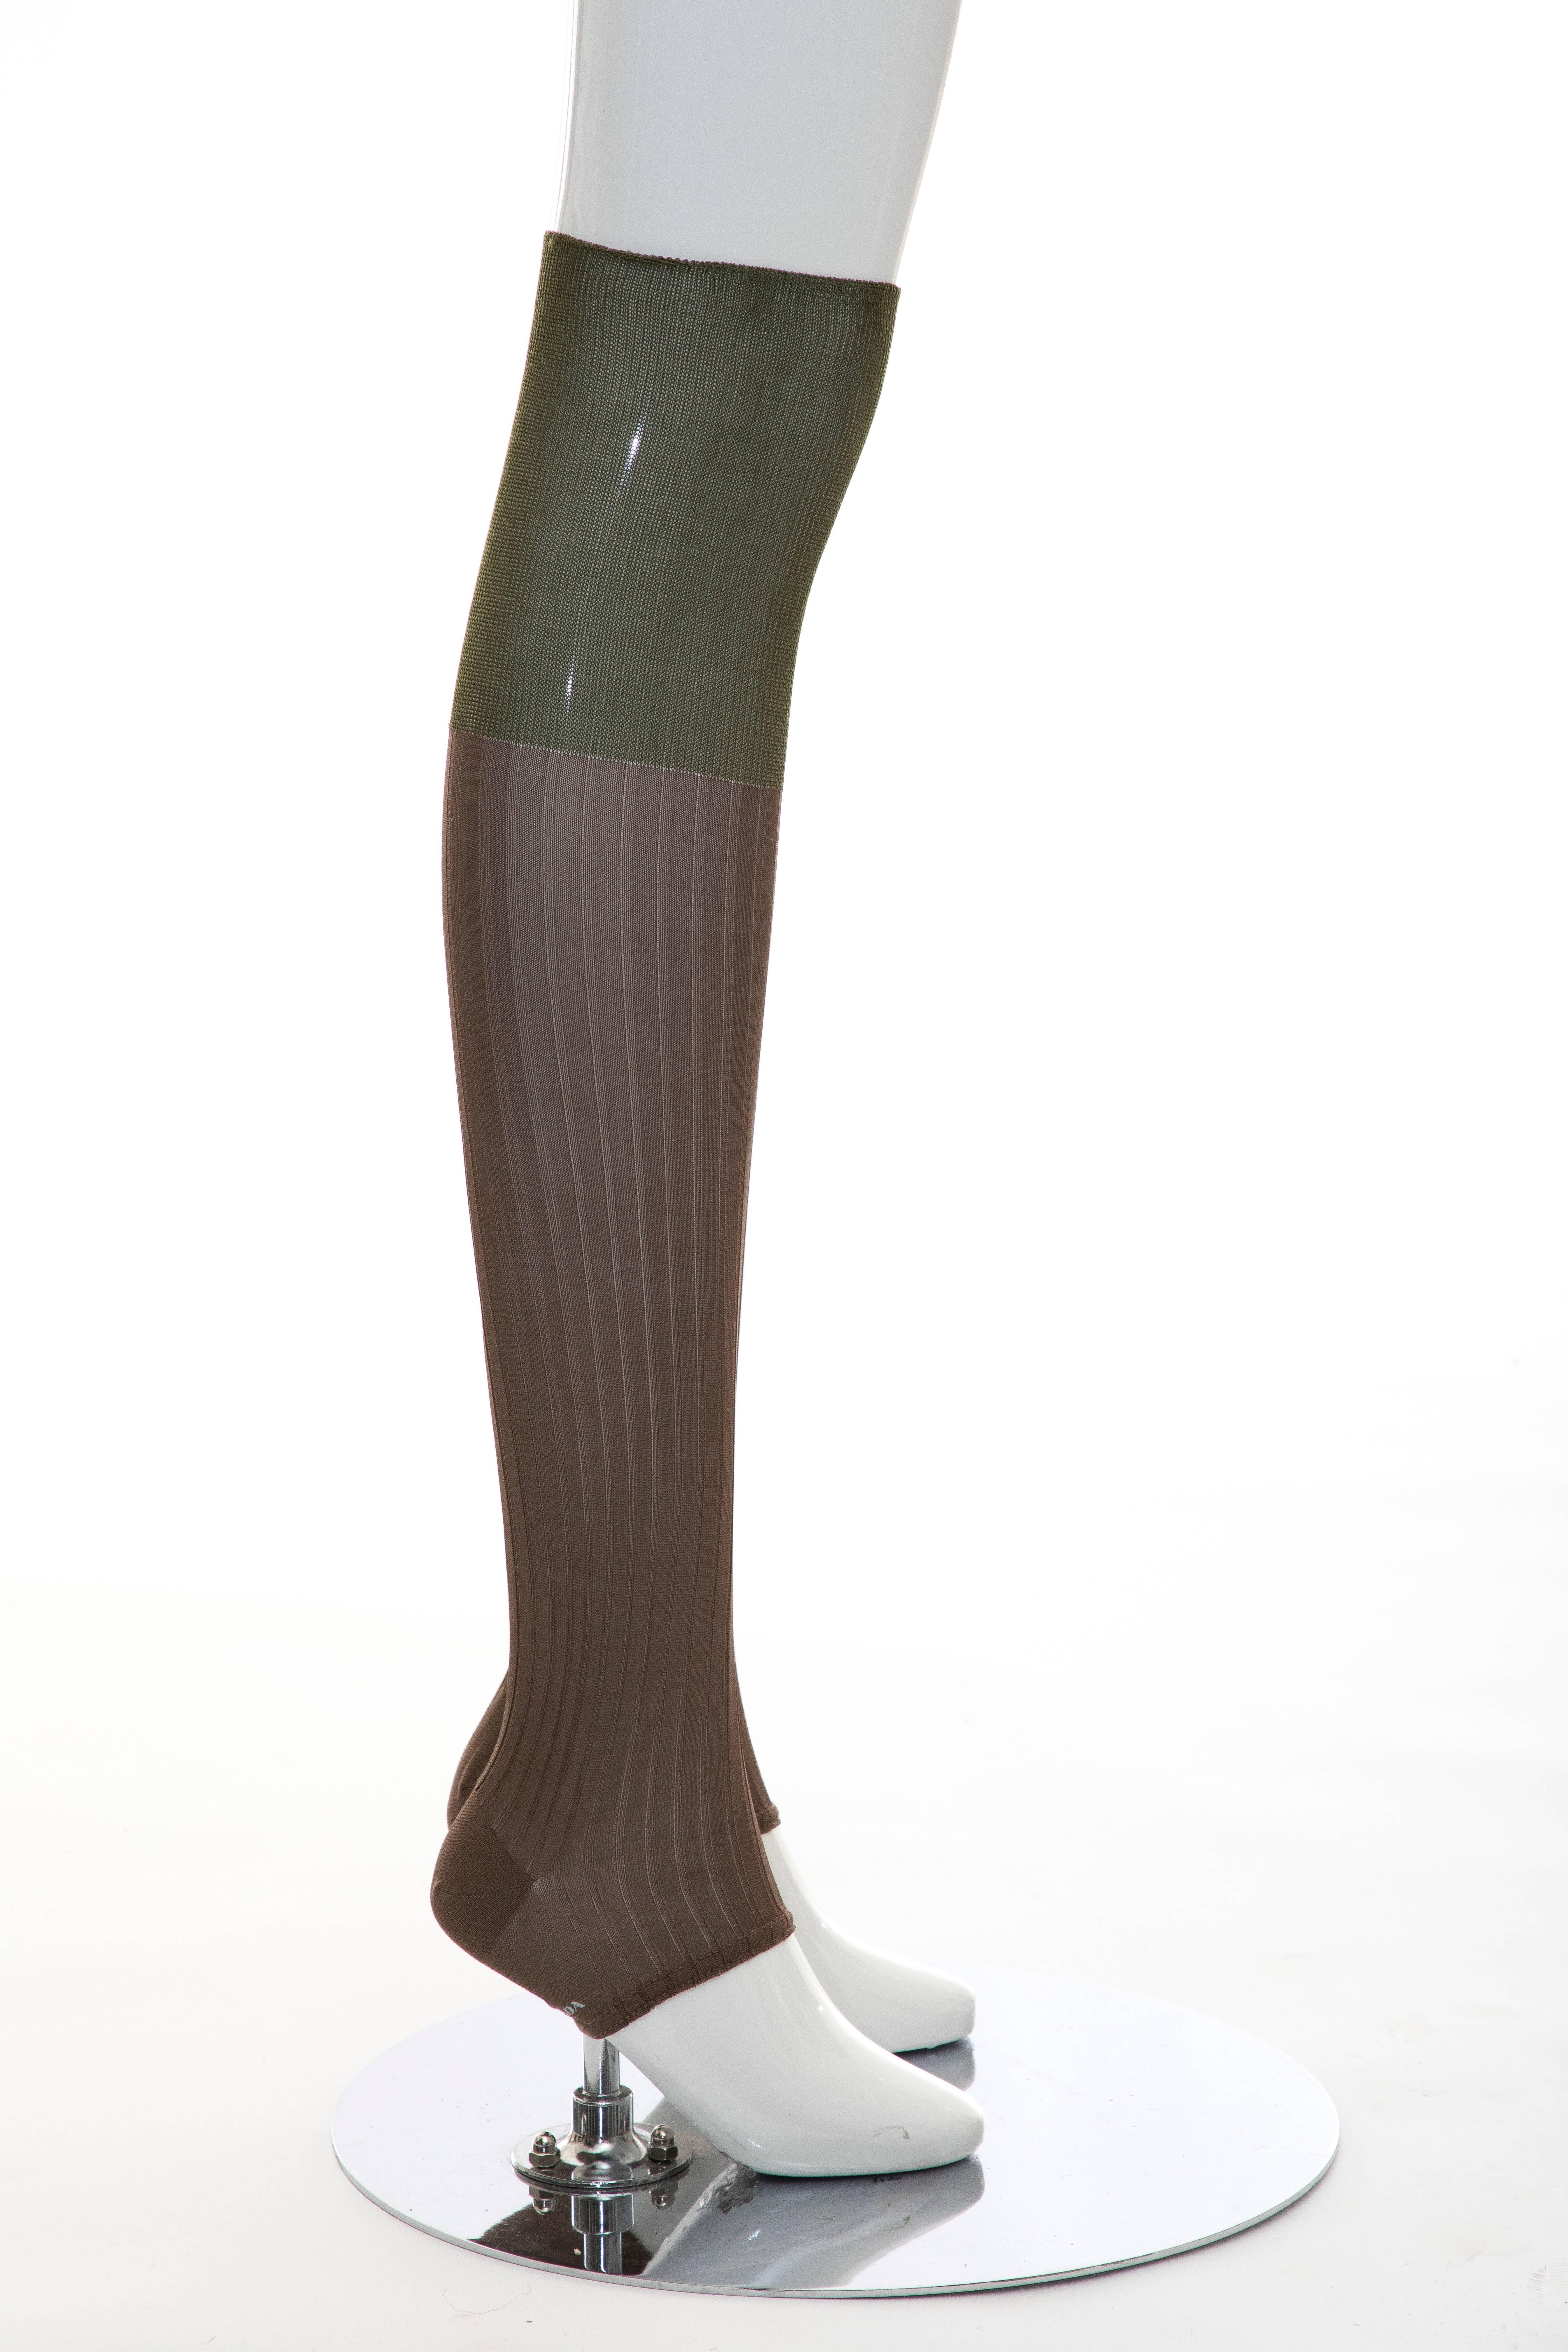 Prada, Fall 2007 runway footless two-tone knee high socks.